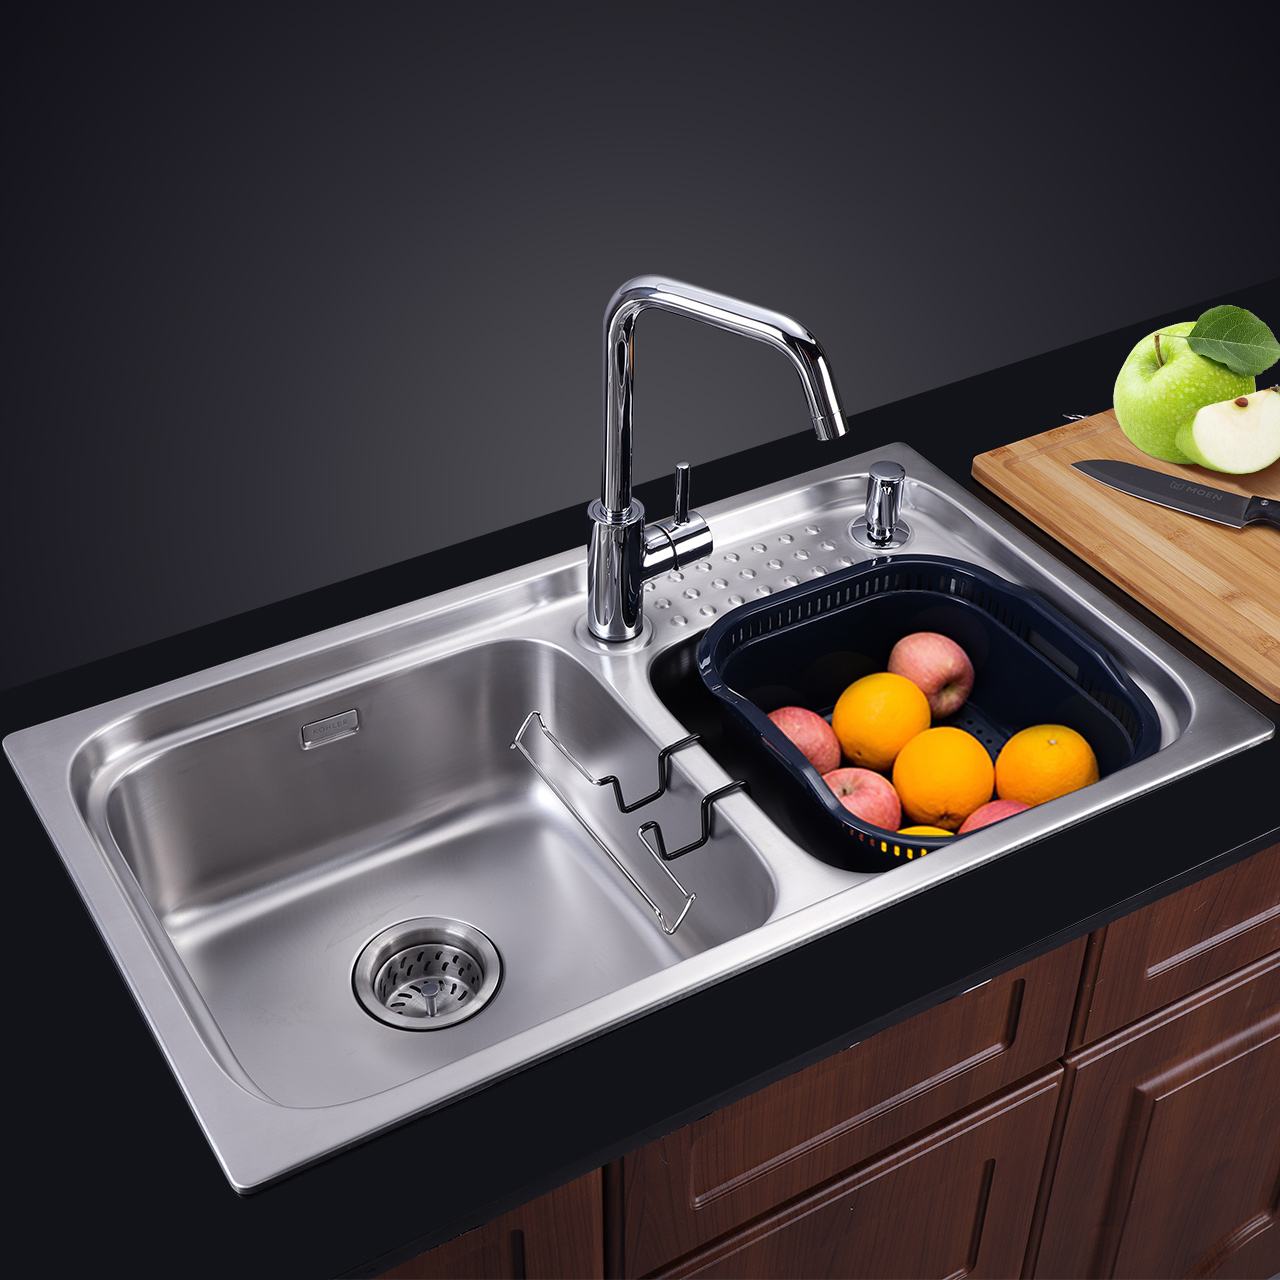 Maintain stainless steel kitchen sink